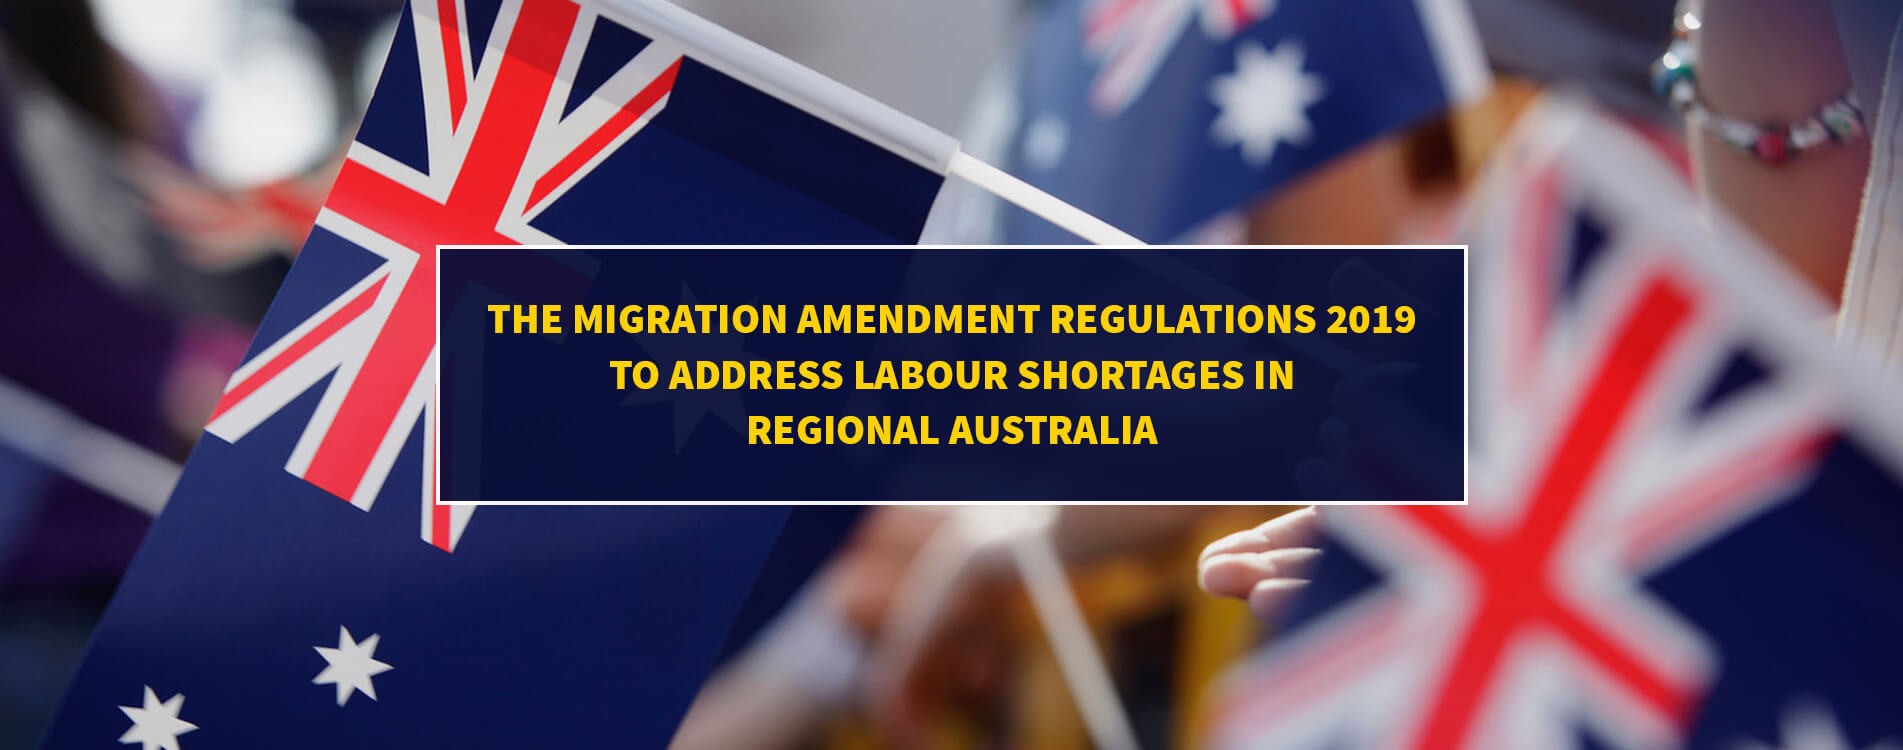 The Migration Amendment Regulations 2019 to Address Labour Shortages in Regional Australia